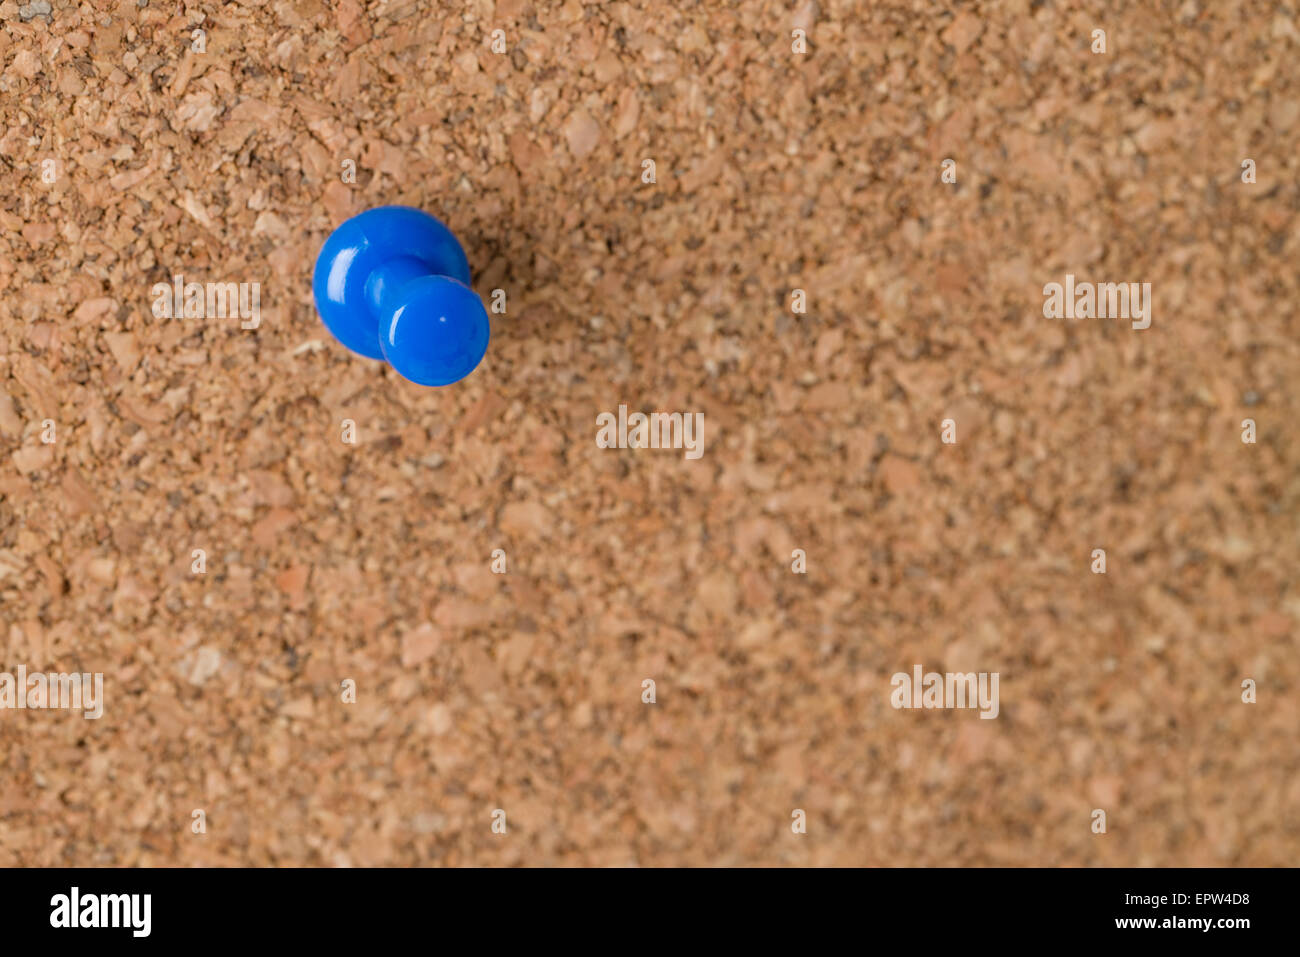 A single blue thumb tack on a cork board. Stock Photo